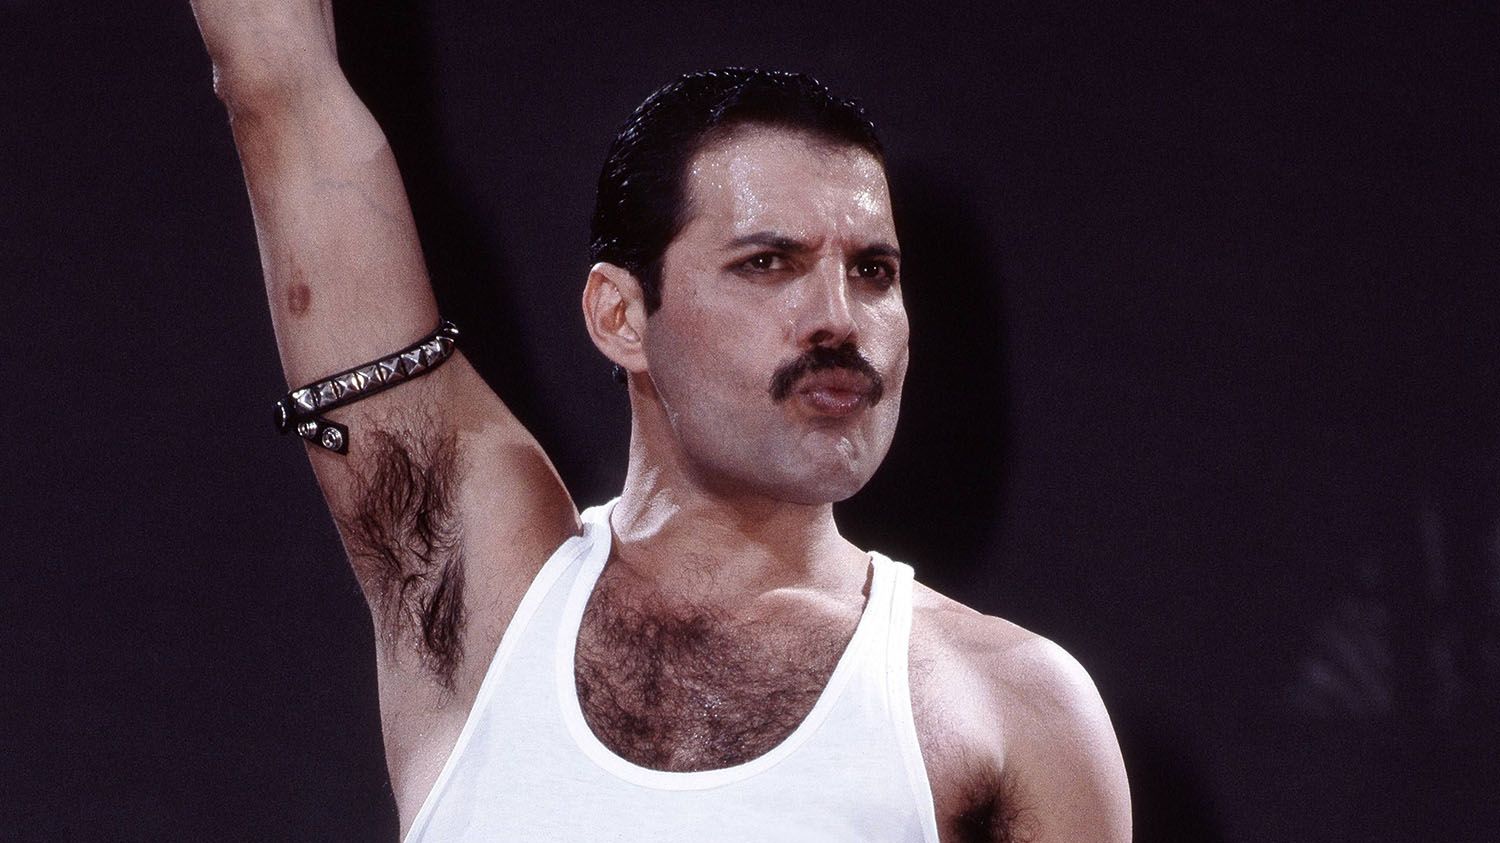 20 fascinating facts about Queen legend Freddie Mercury